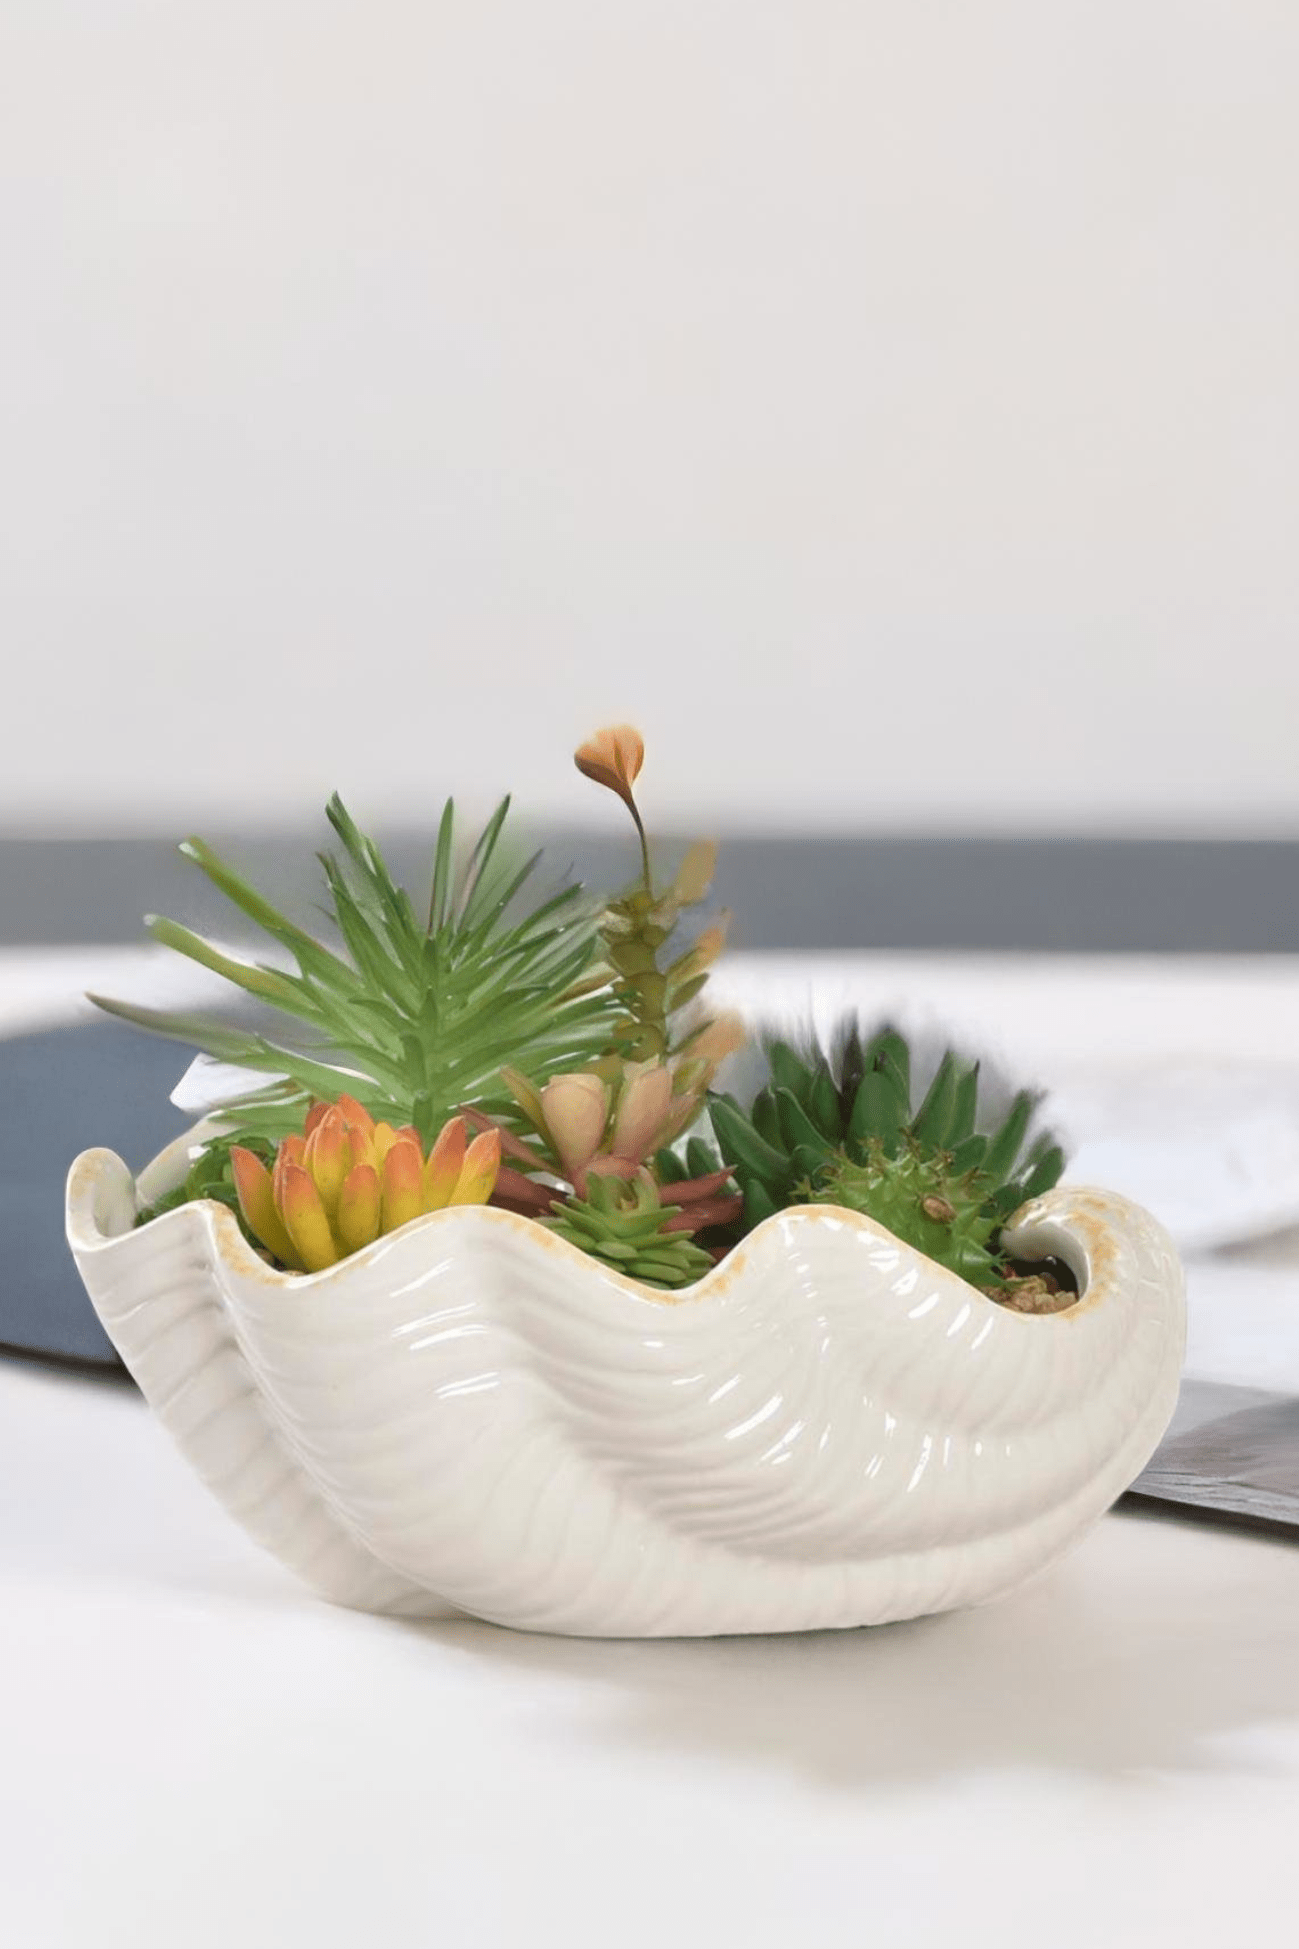 Item International Skal Piantina artificiale con vaso in ceramica a forma di conchiglia